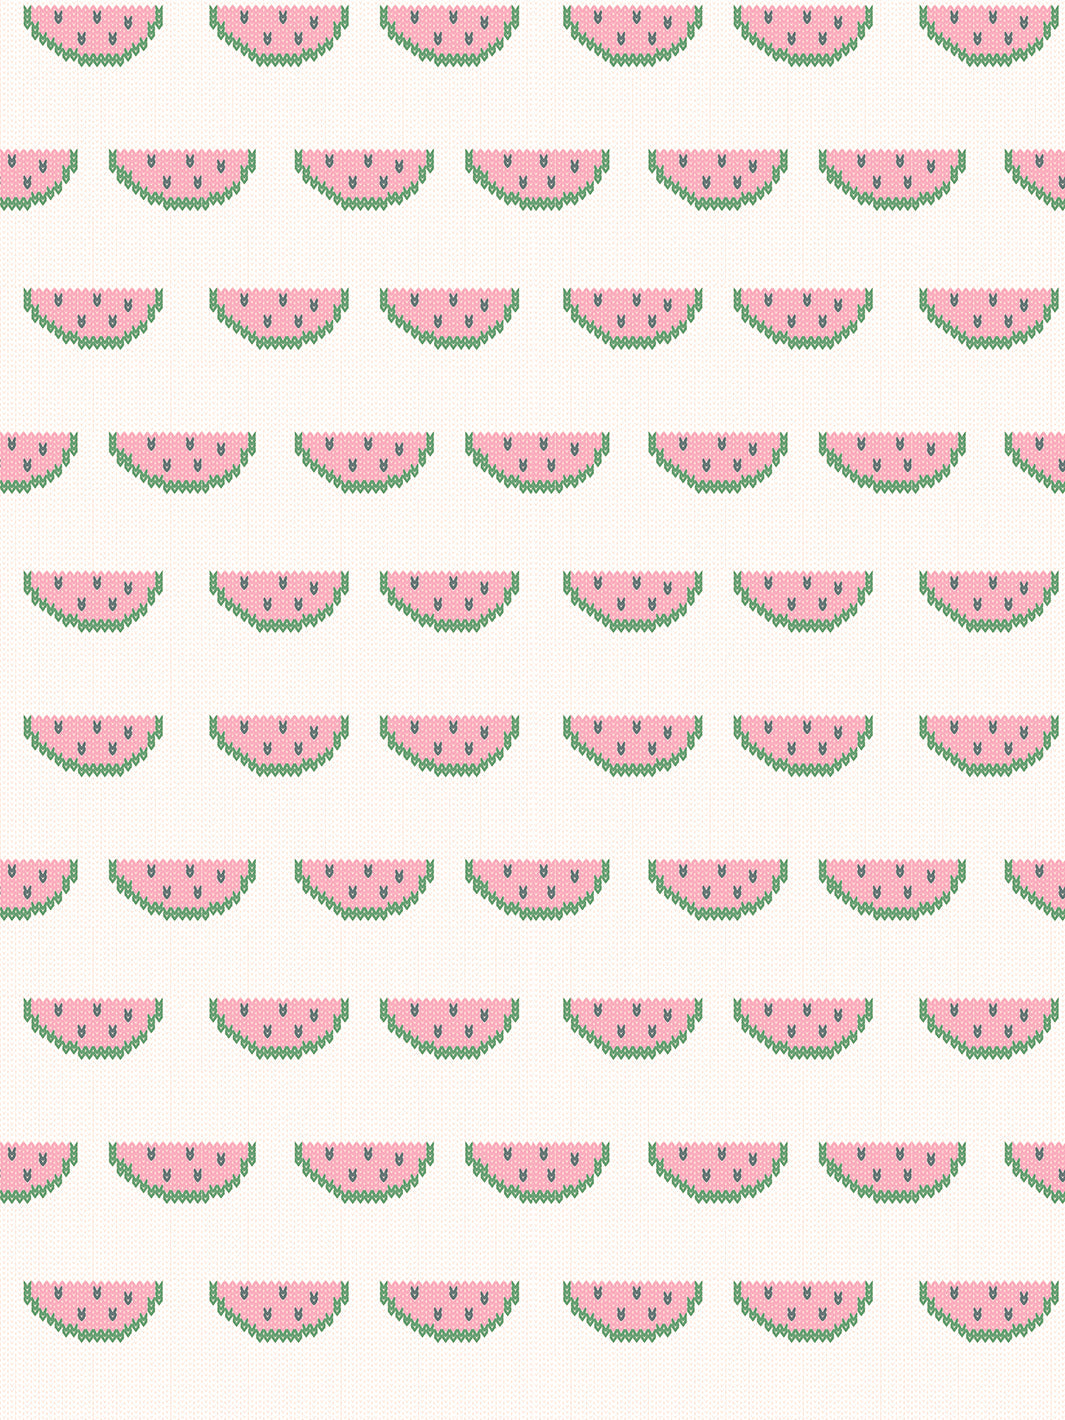 'Watermelon Knit' Wallpaper by Tea Collection - Ballet Slipper